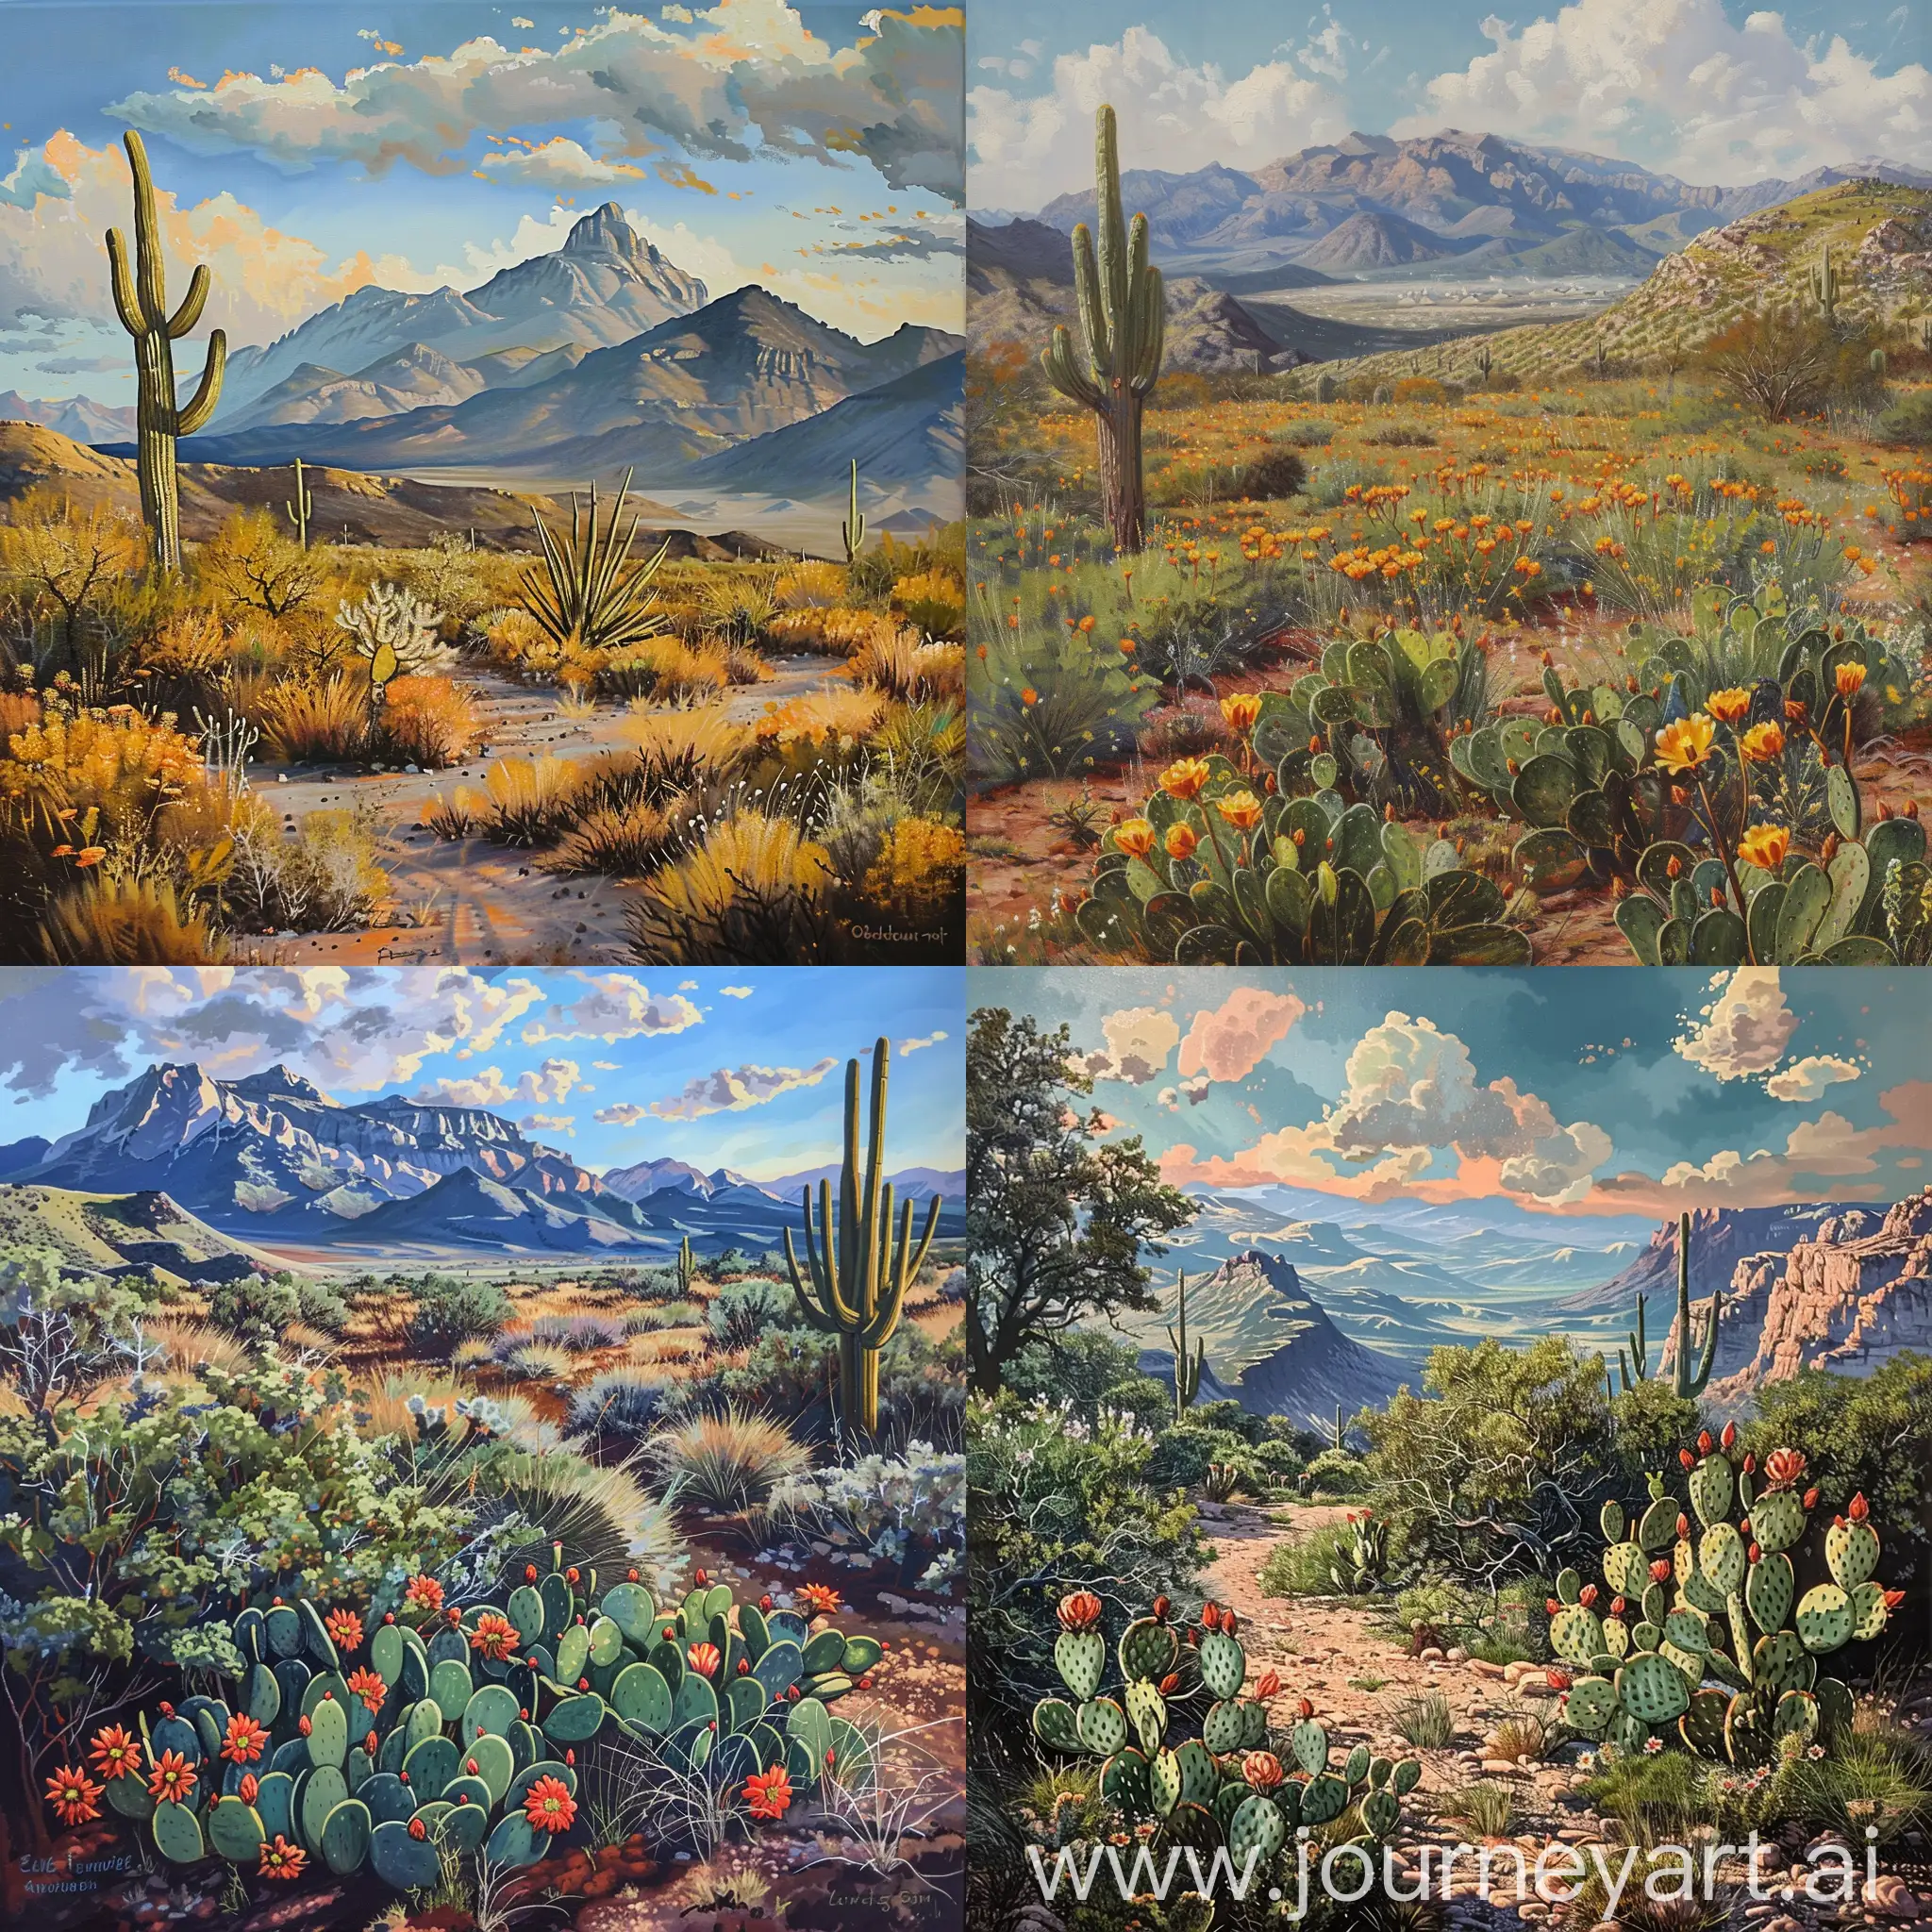 Siuox-Native-American-Desert-Landscape-with-Kactus-Mountain